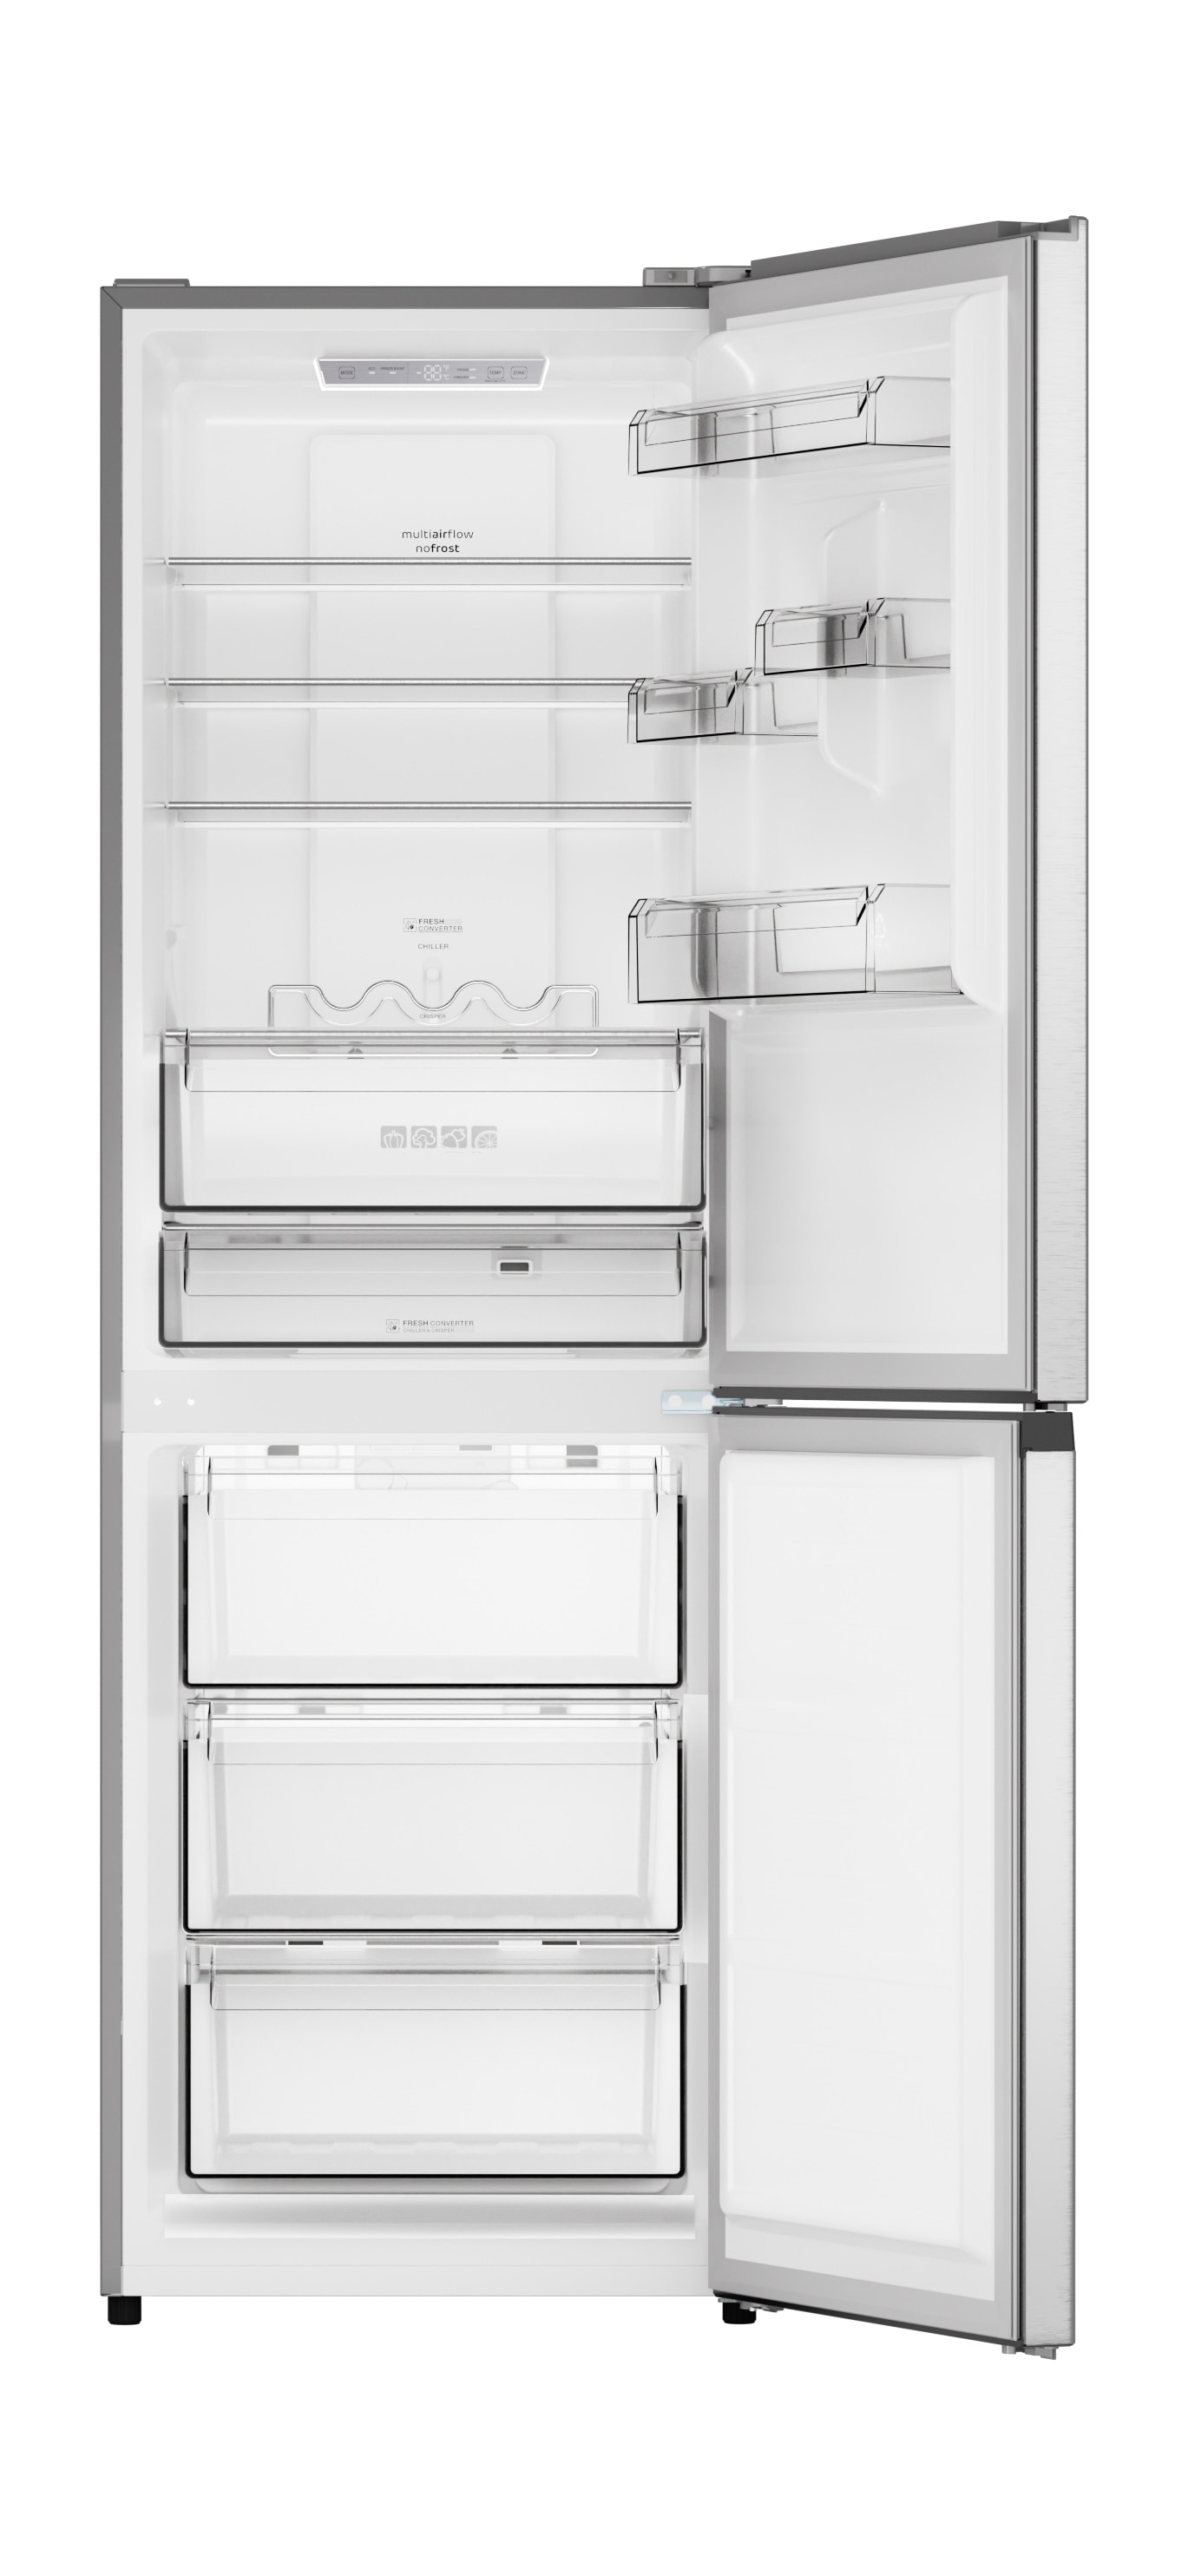 Sharp 11.5-cu ft Bottom-Freezer Refrigerator STAR (Stainless Steel) the Bottom-Freezer department at ENERGY Refrigerators in